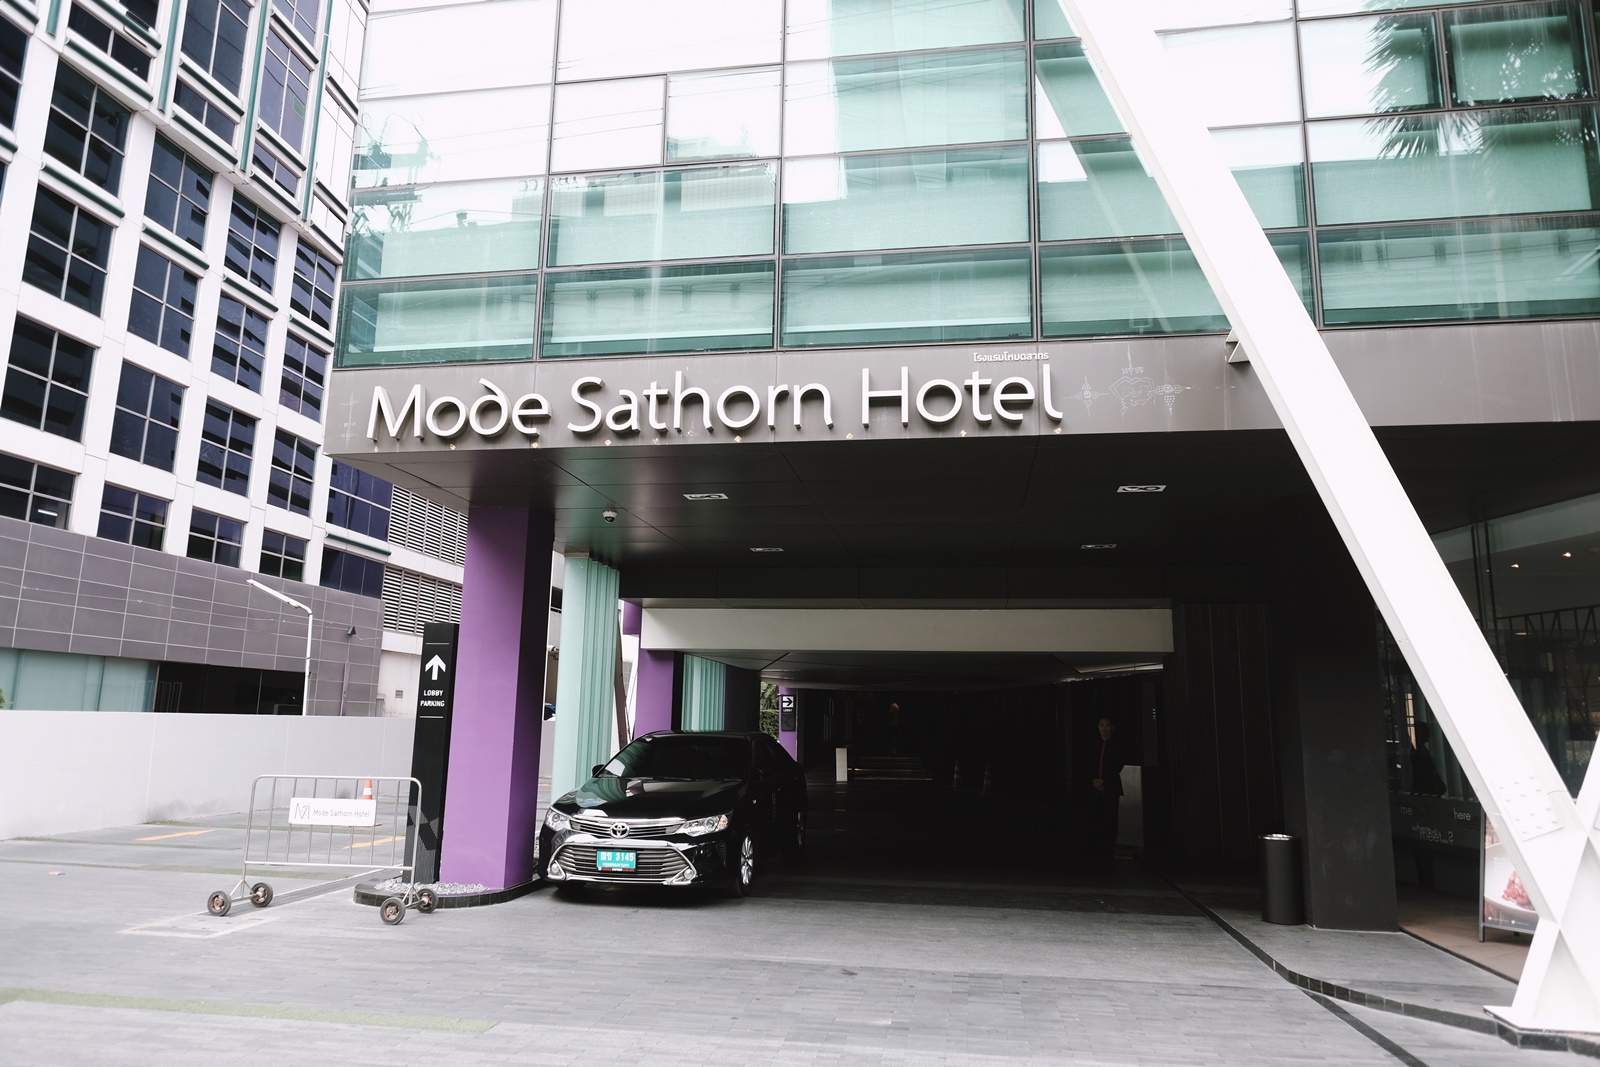 mode sathorn hotel